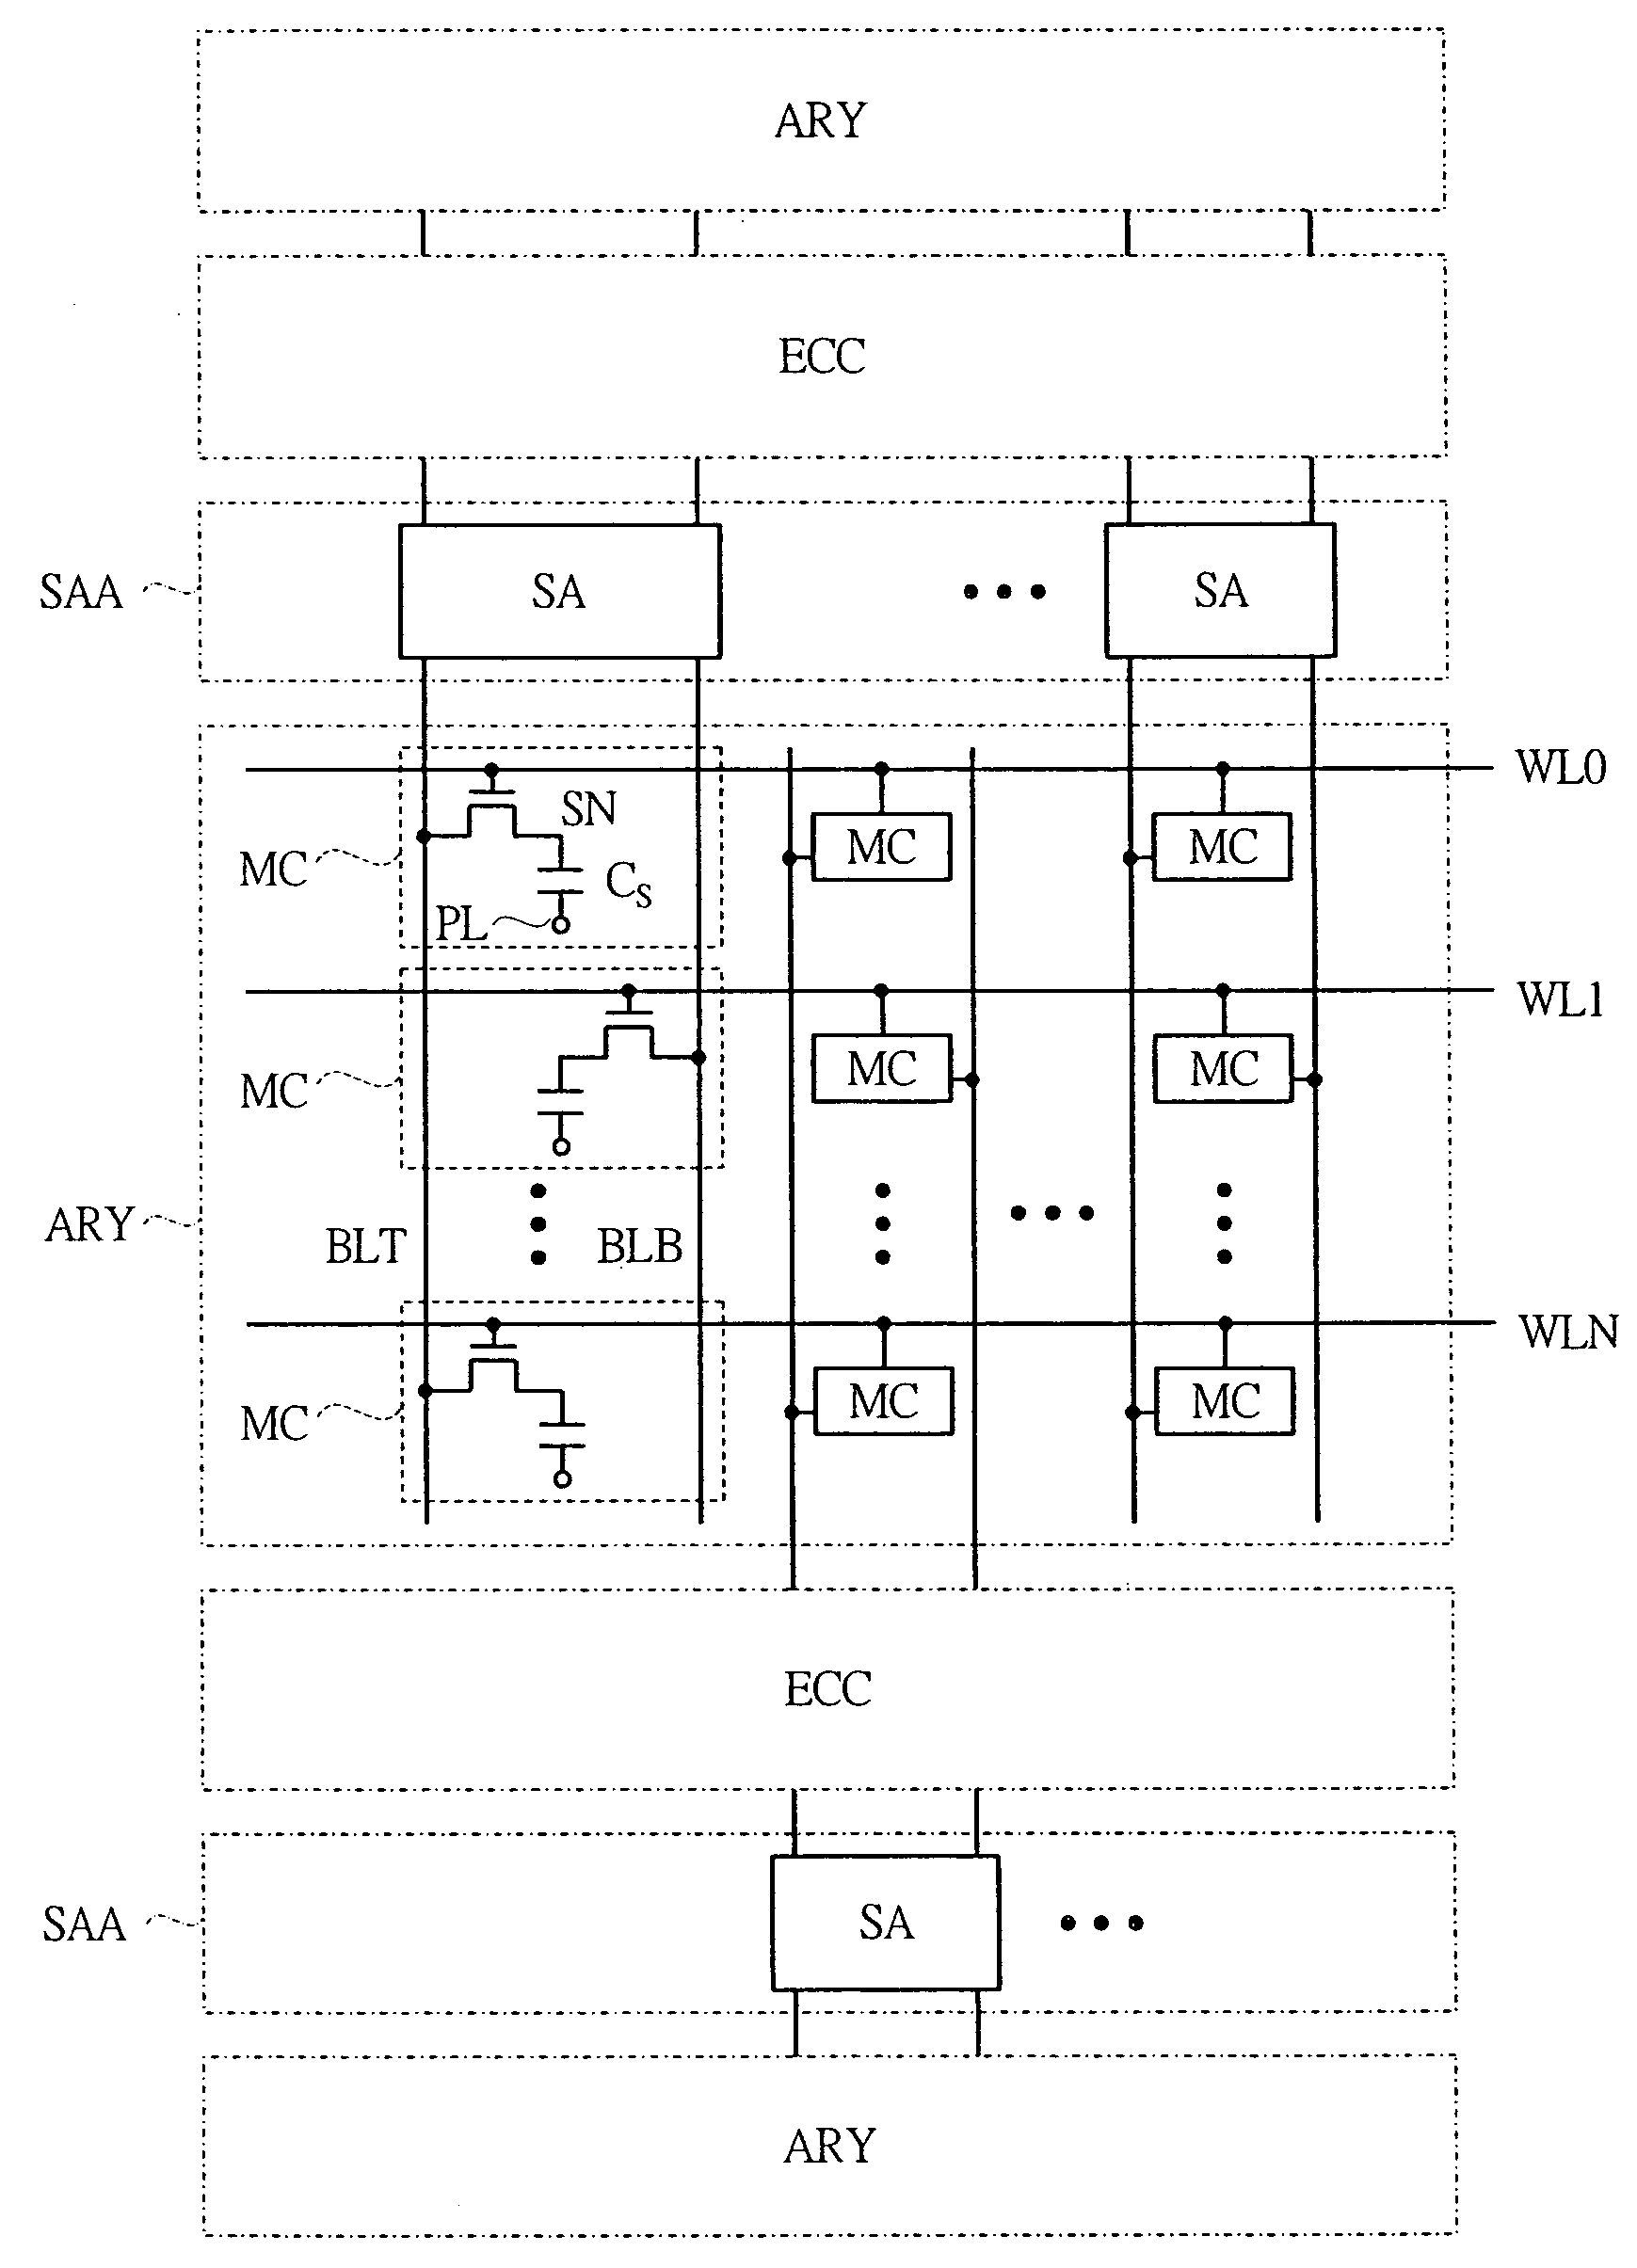 Semiconductor device having a sense amplifier array with adjacent ECC